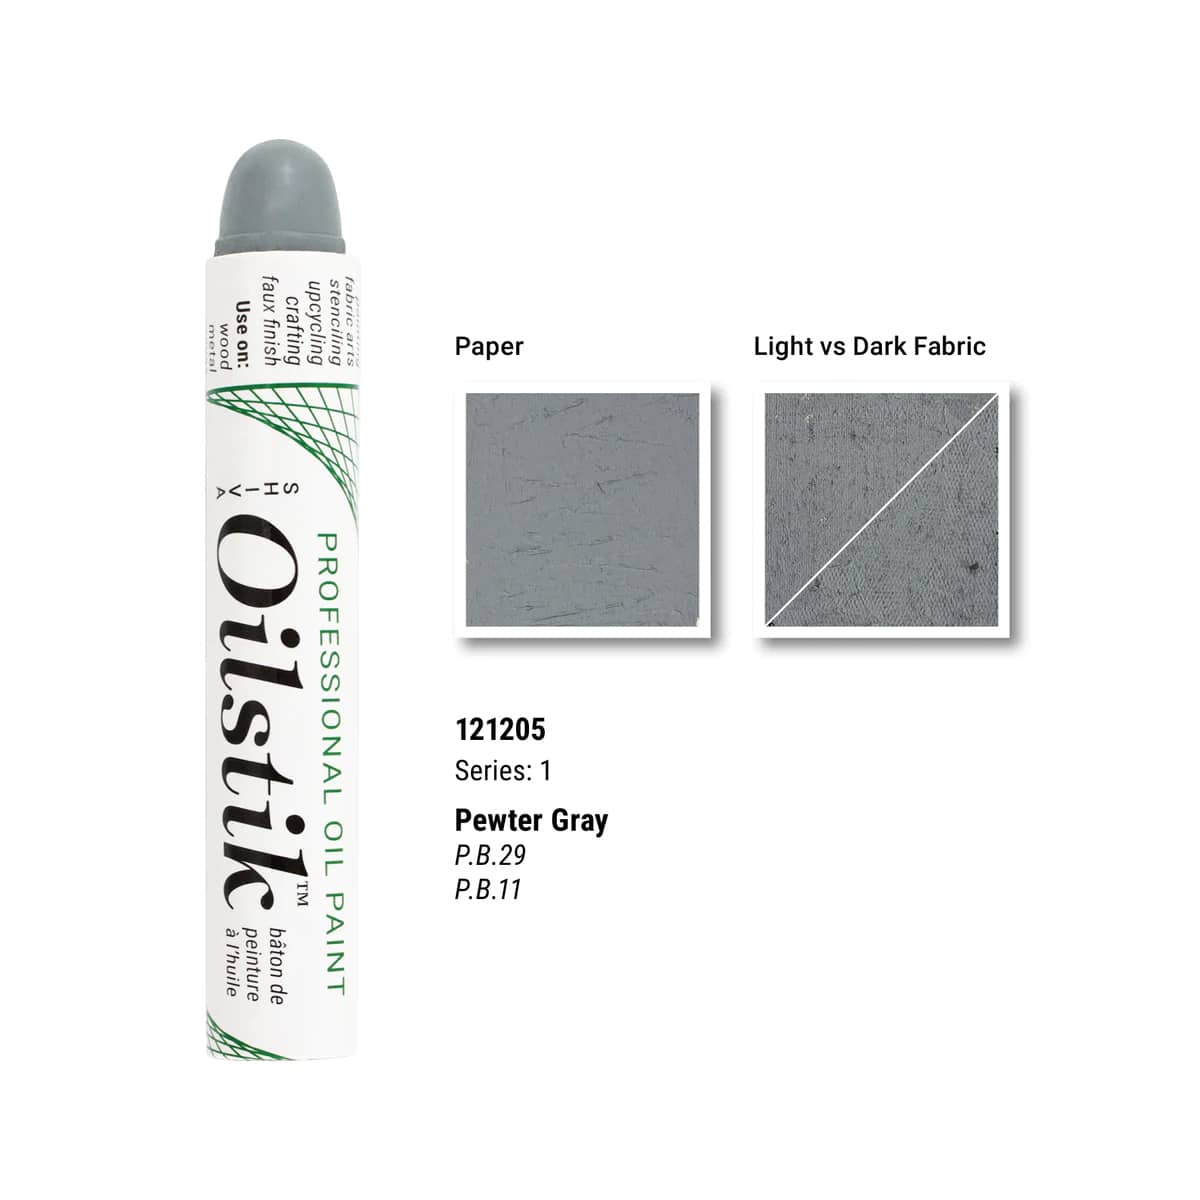 Snazaroo Face Paint - Light Grey, 18ml Compact